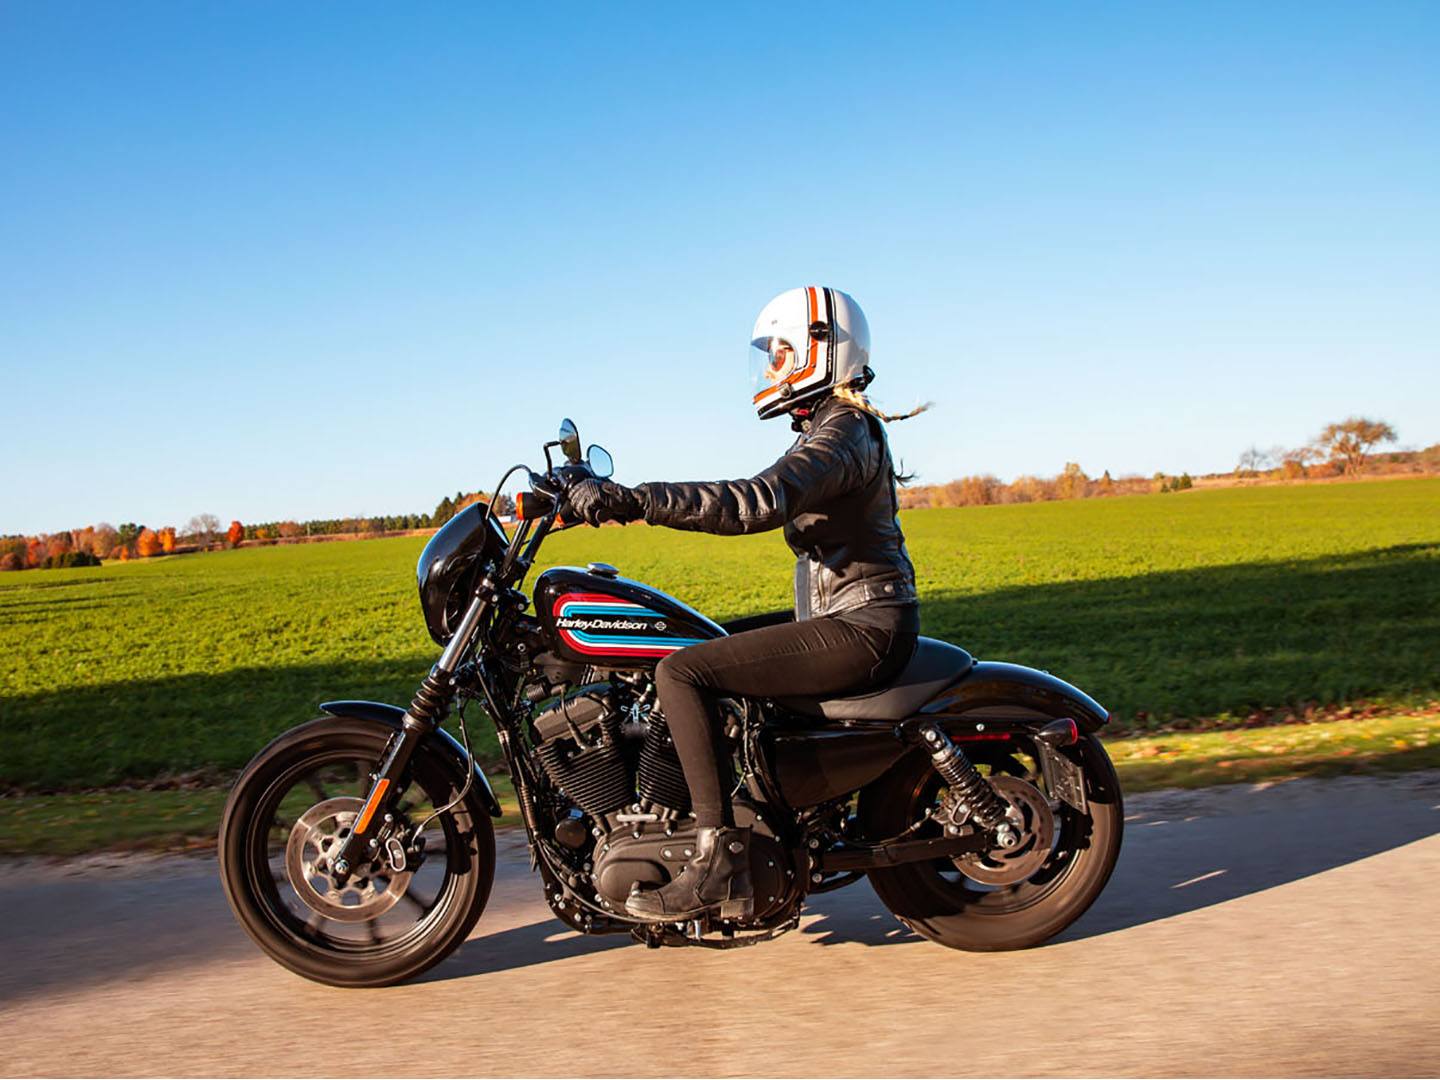 2021 Harley-Davidson Iron 1200™ in Sandy, Utah - Photo 9